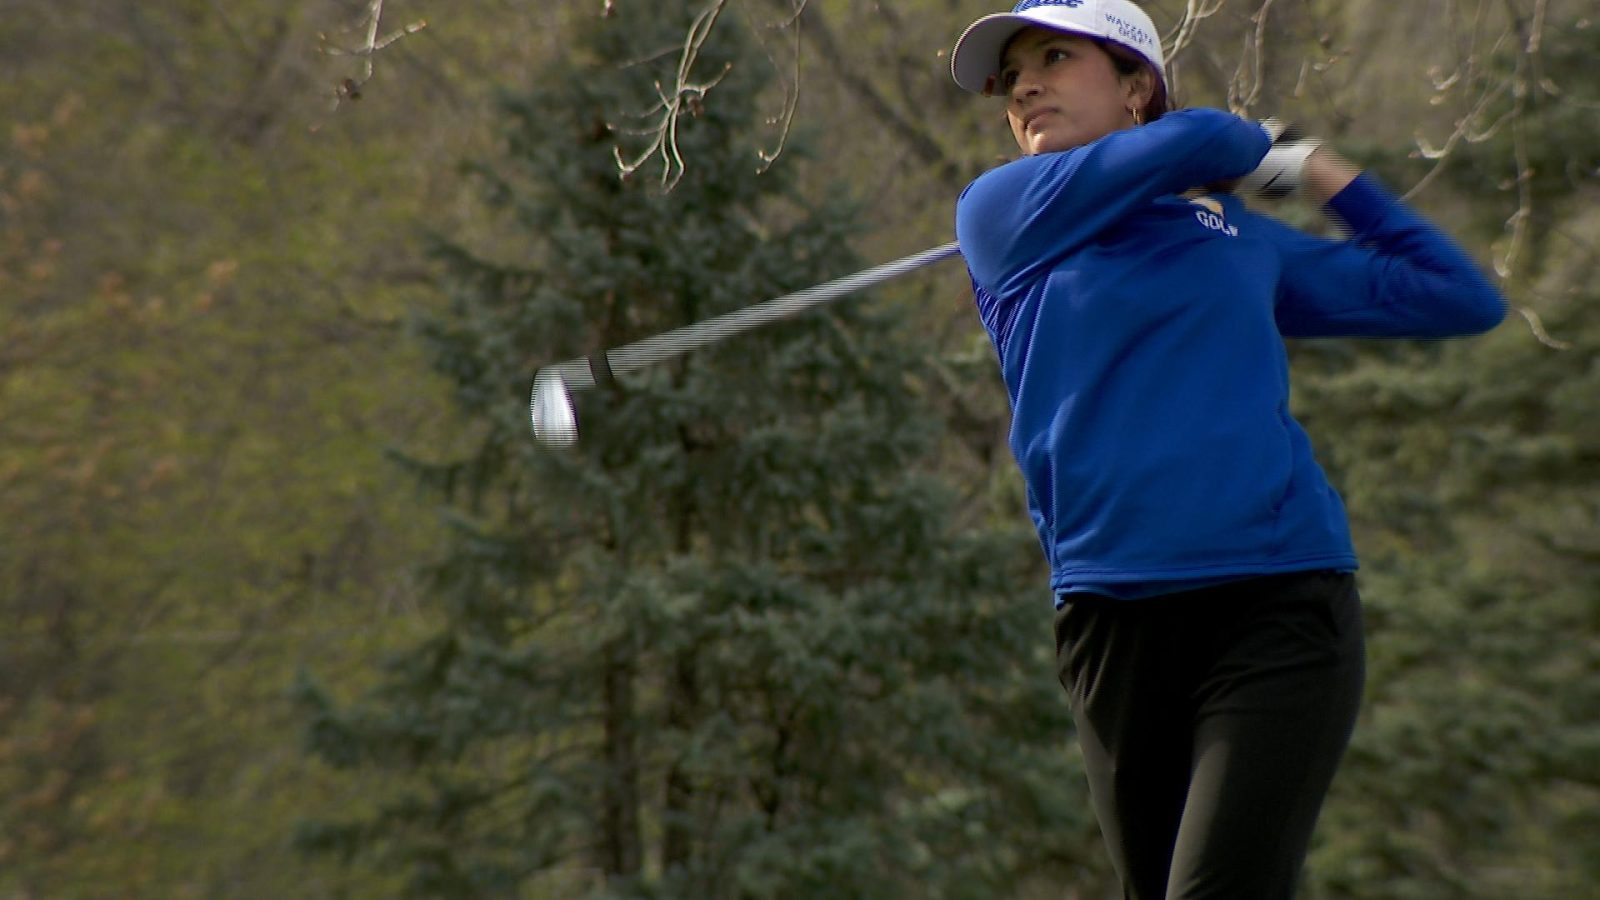 Sacchi Deshmukh, a Standout on the Wayzata Girls Golf Team